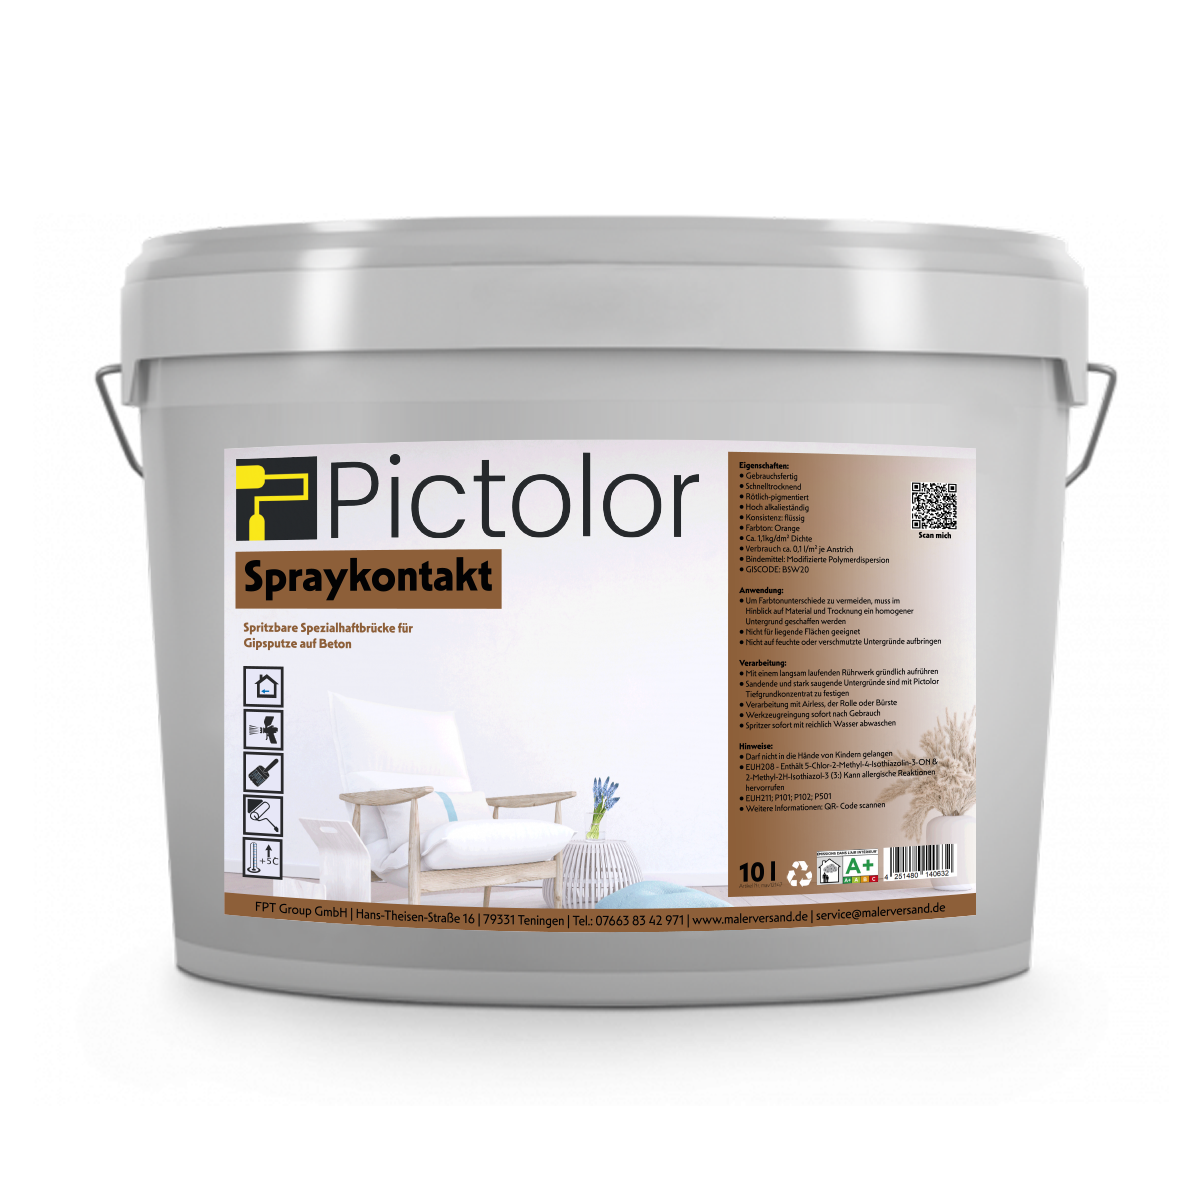 Pictolor® Easy Spraykontakt von Pictolor